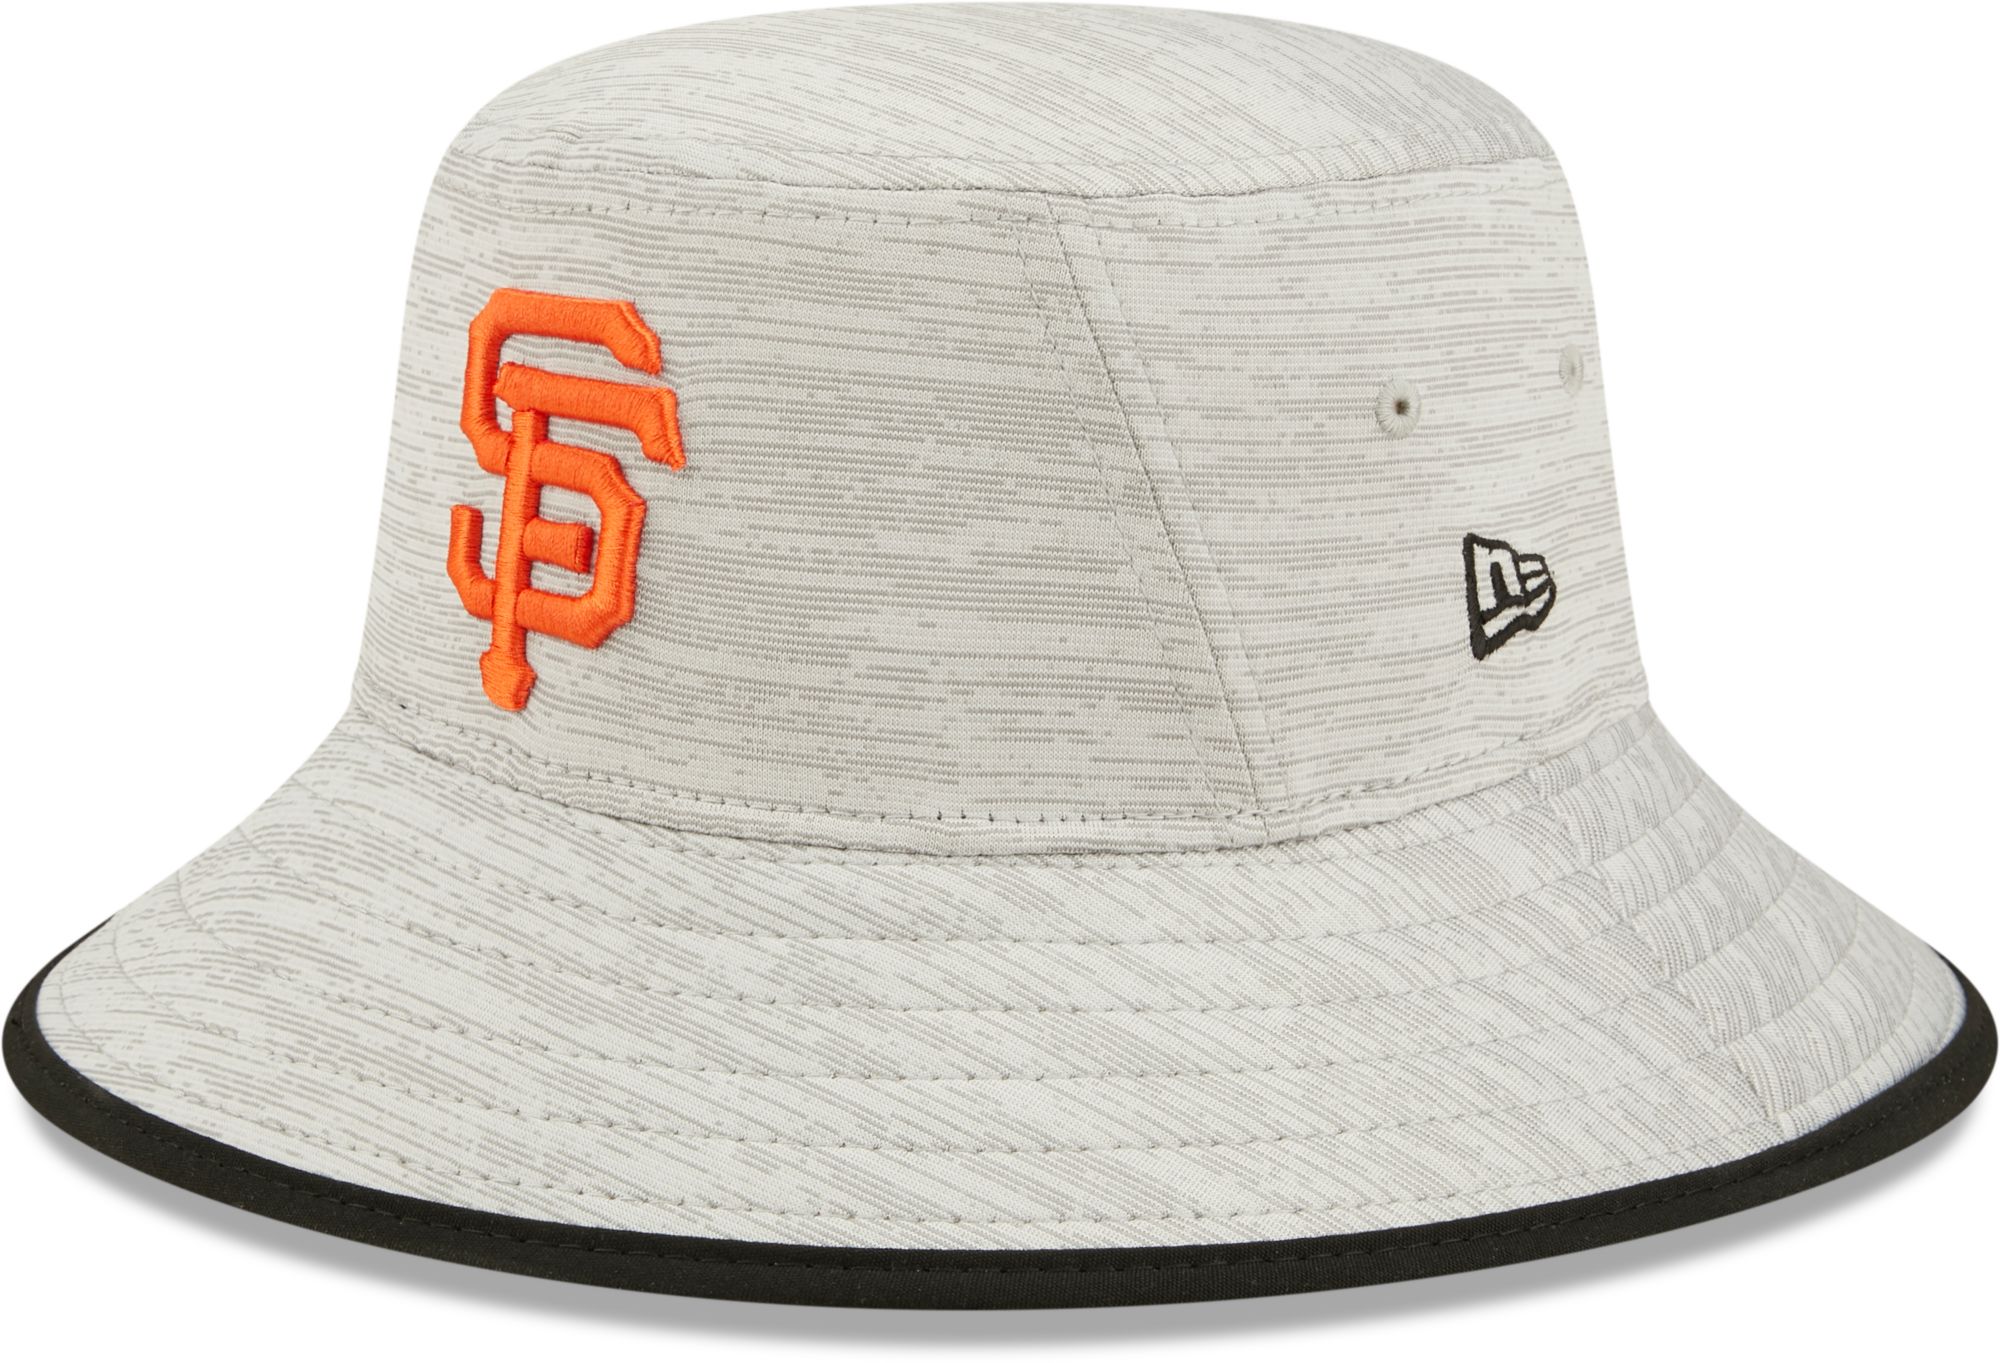 New Era / Men's San Francisco Giants Gray Distinct Bucket Hat